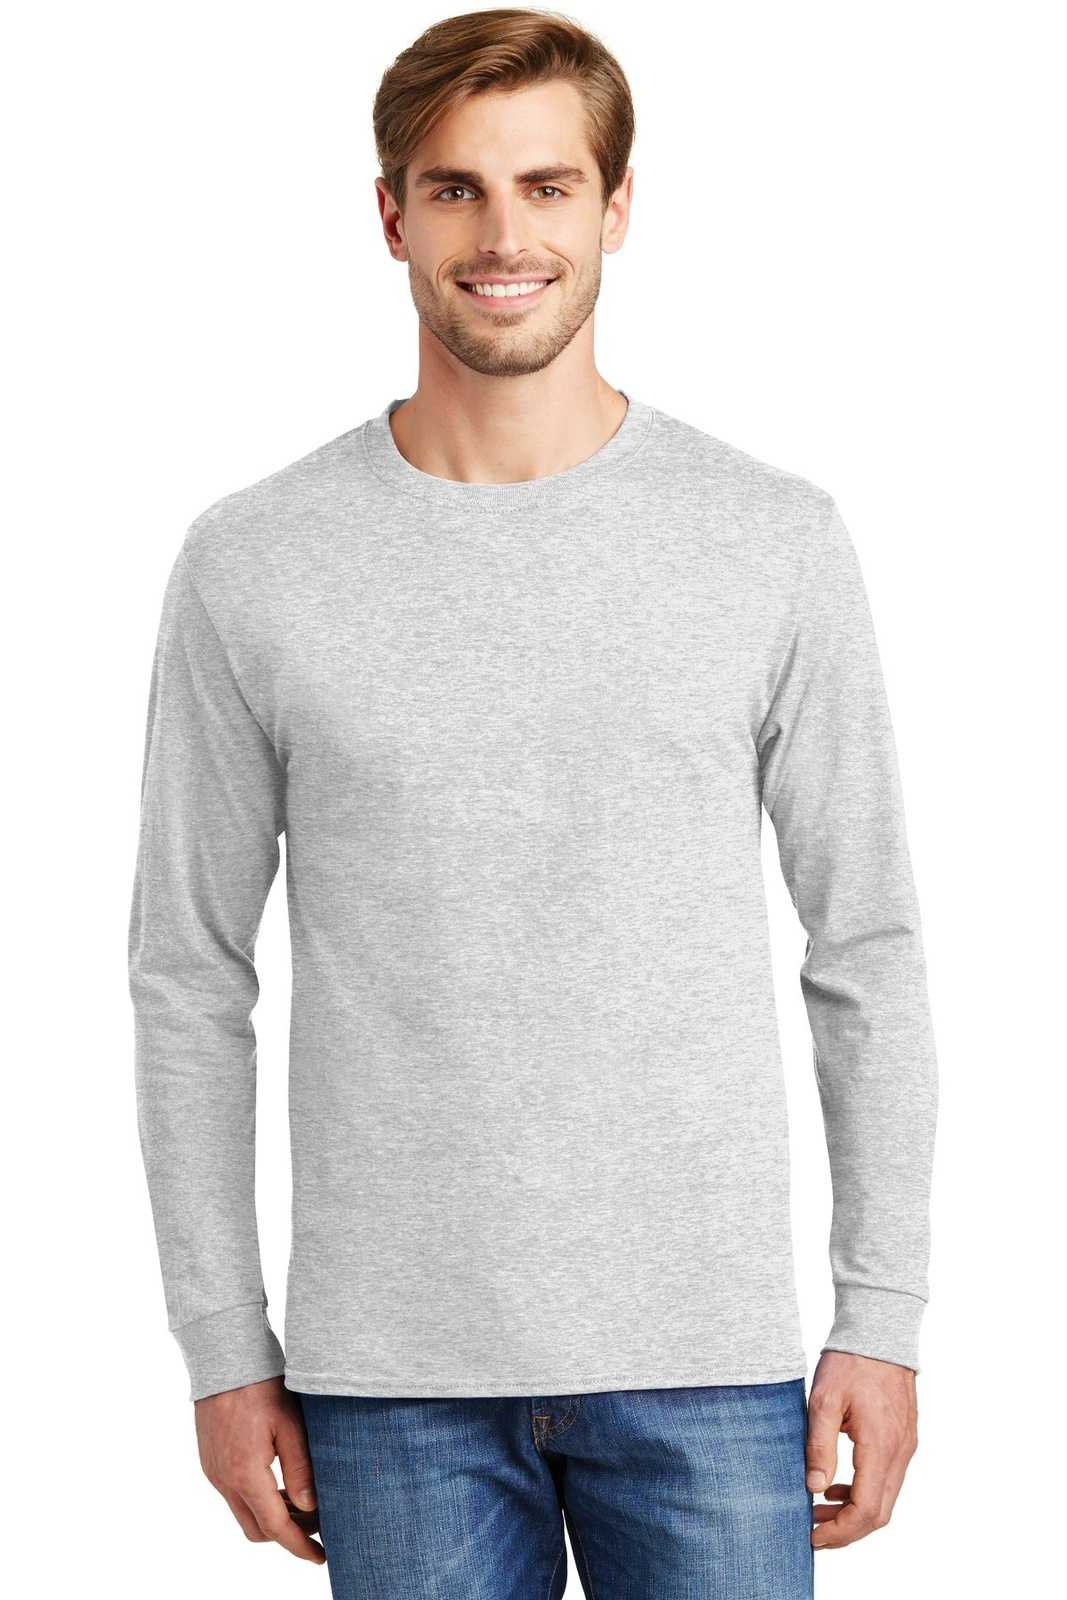 Hanes 5586 Tagless 100% Cotton Long Sleeve T-Shirt - Ash - HIT a Double